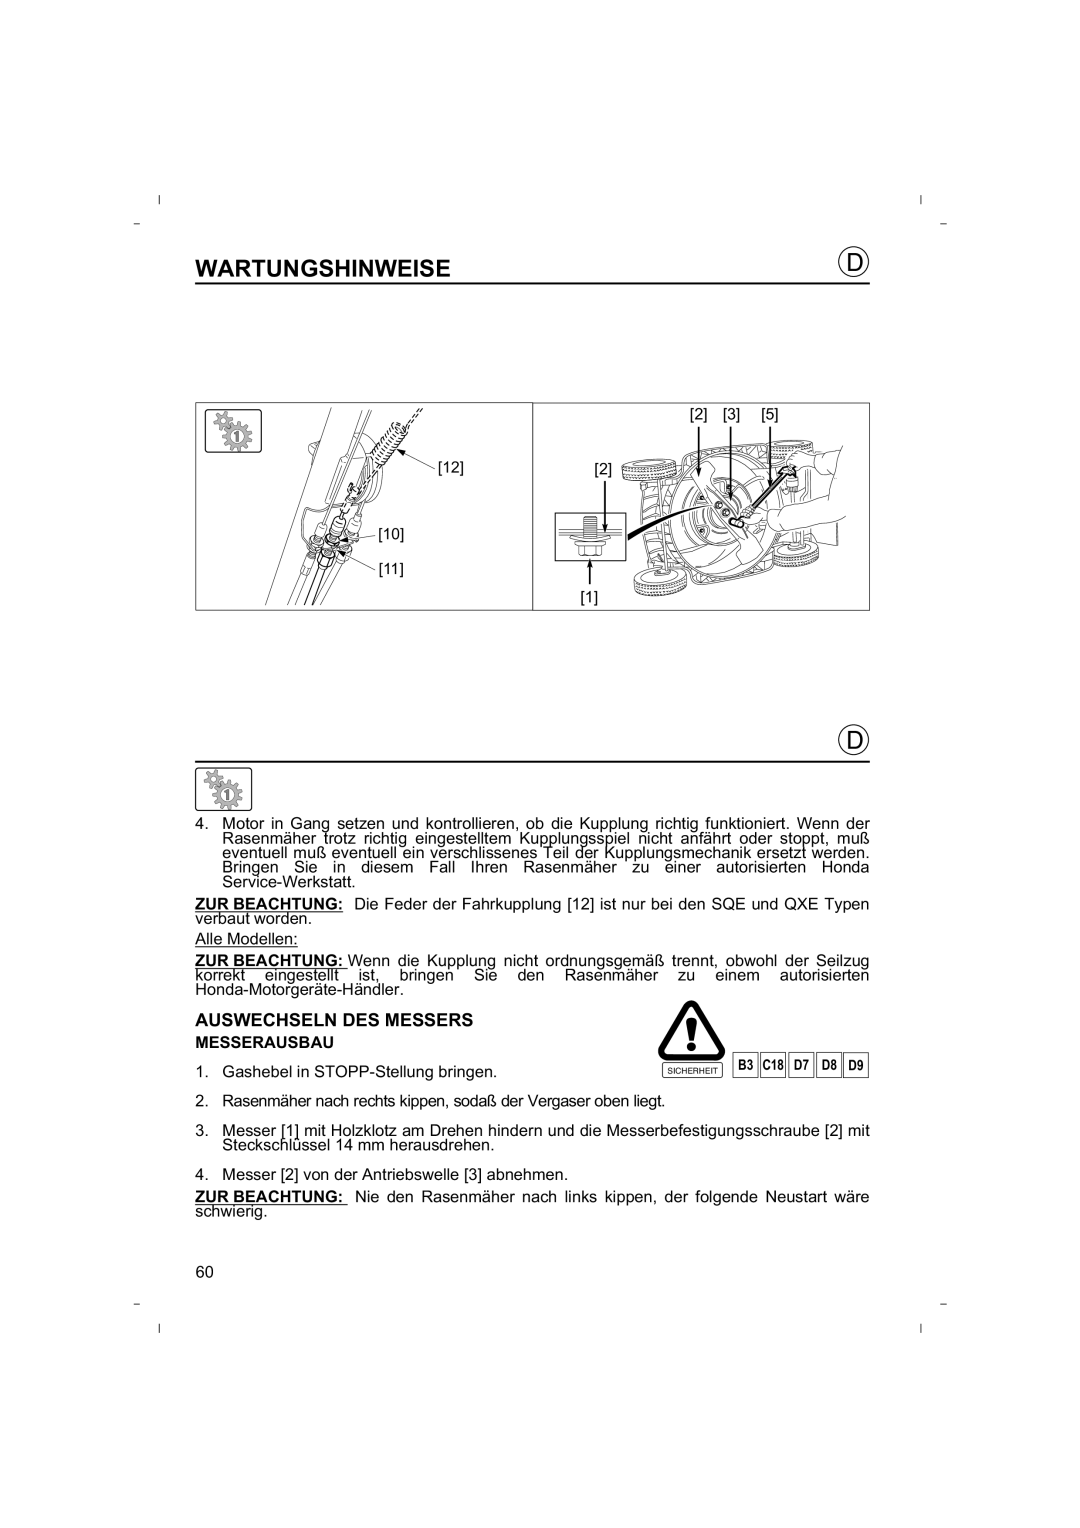 Honda Power Equipment HRB425C owner manual Auswechseln Des Messers, Wartungshinweise, Messerausbau 